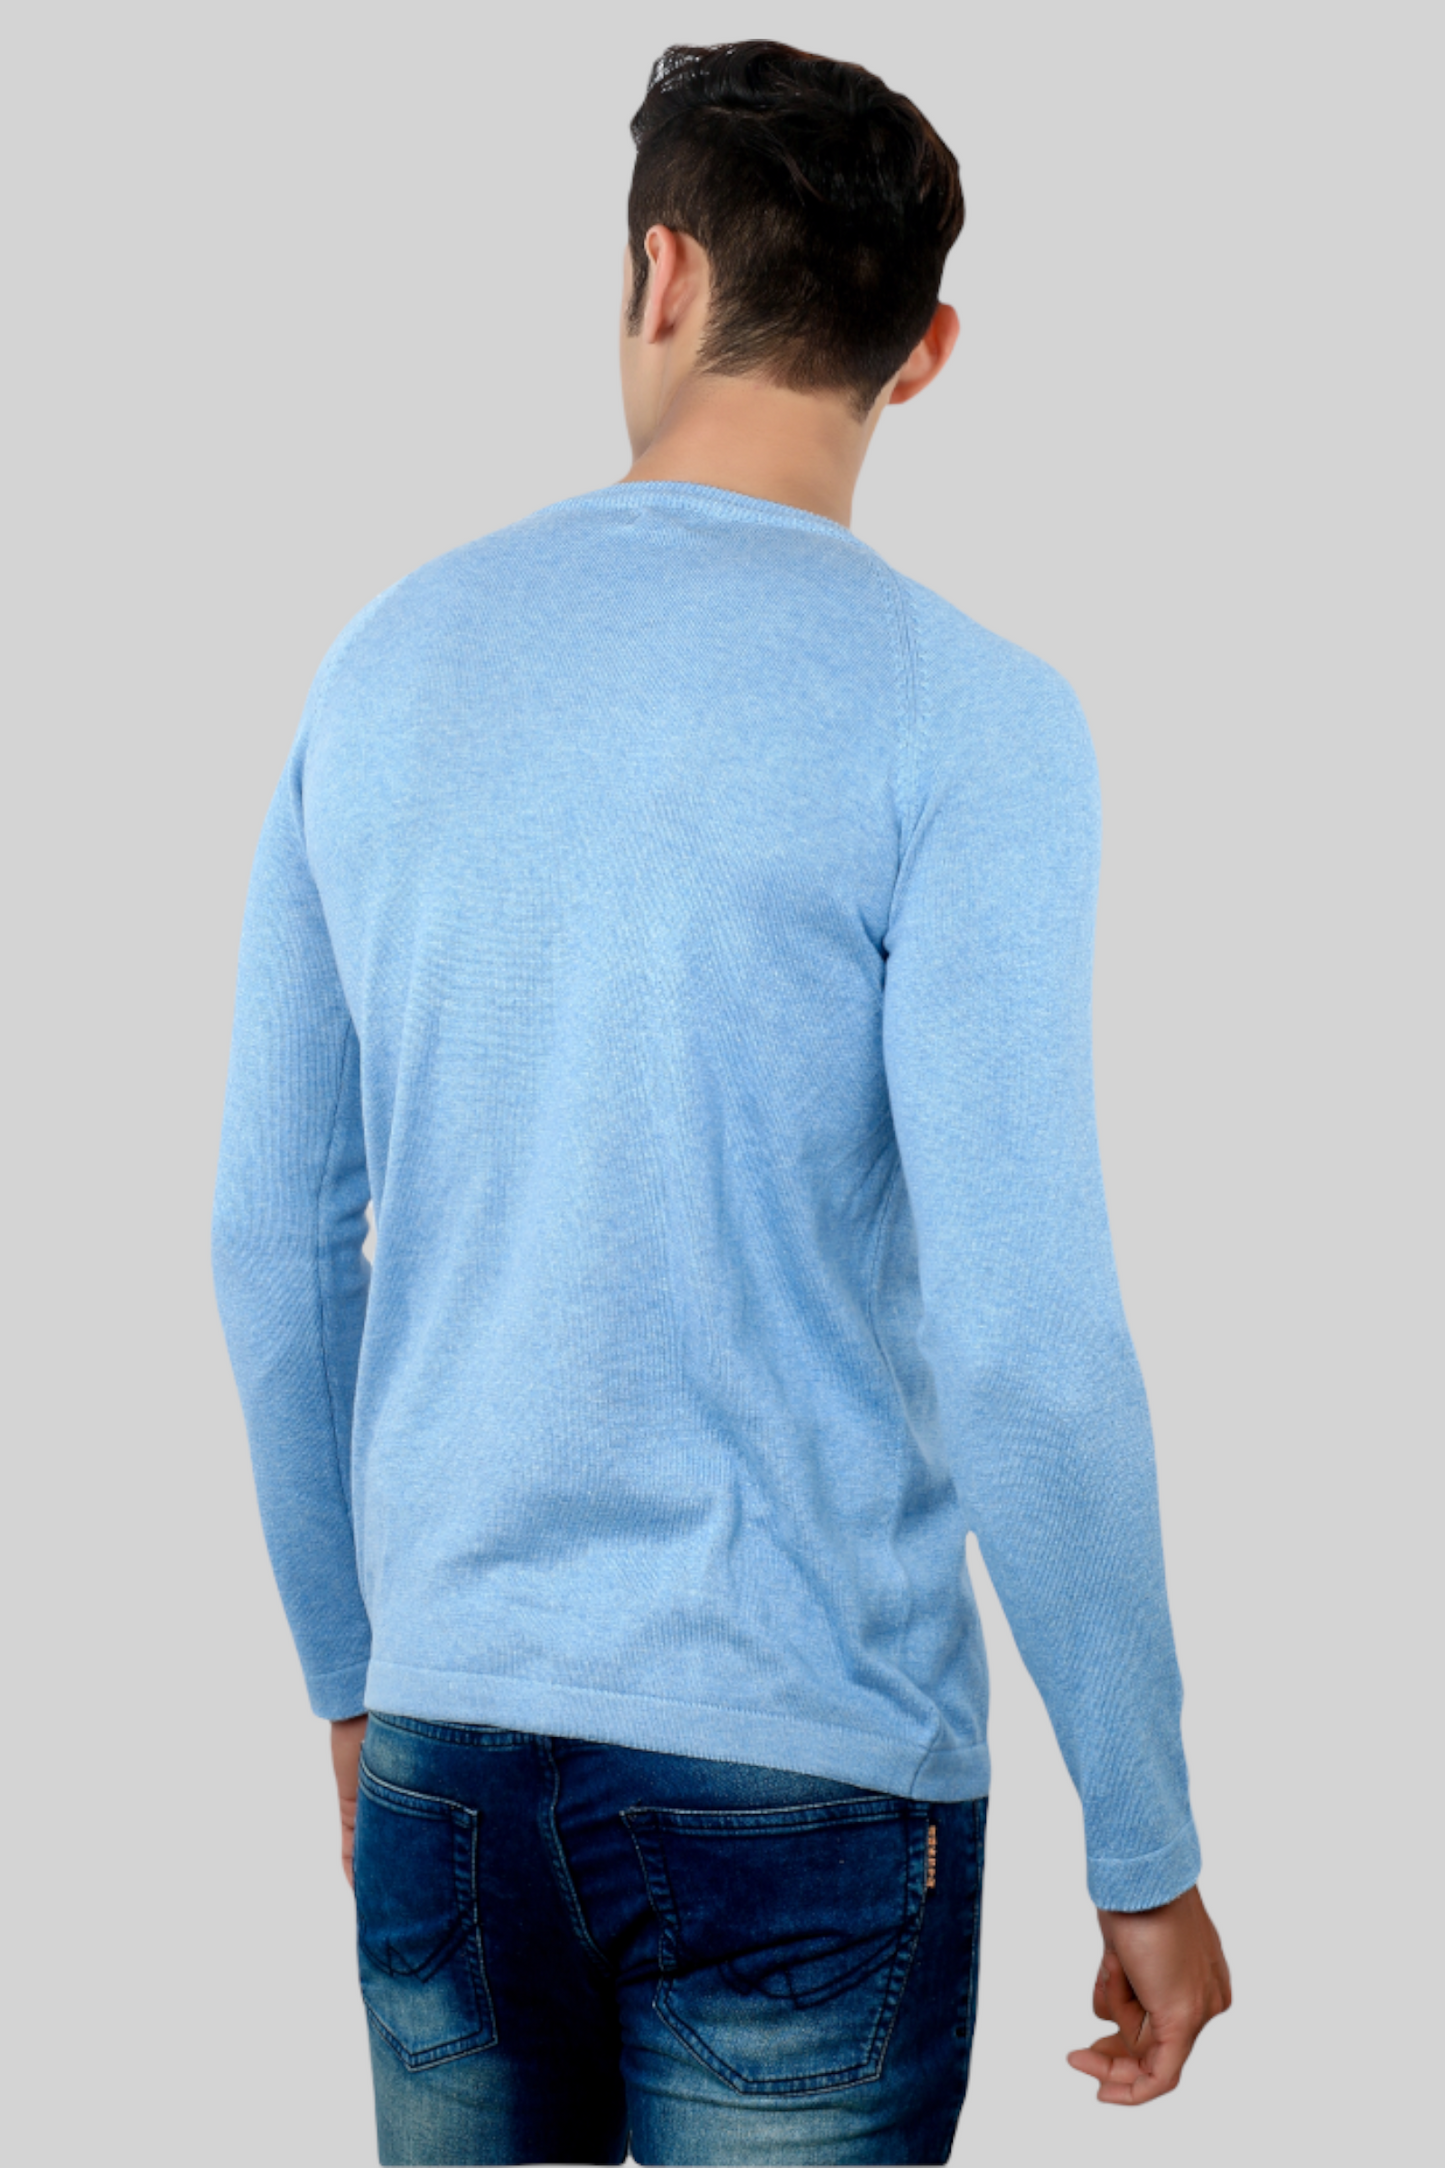 Mens Aqua Blue Flat Knit Full Sleeve round neck T-shirt